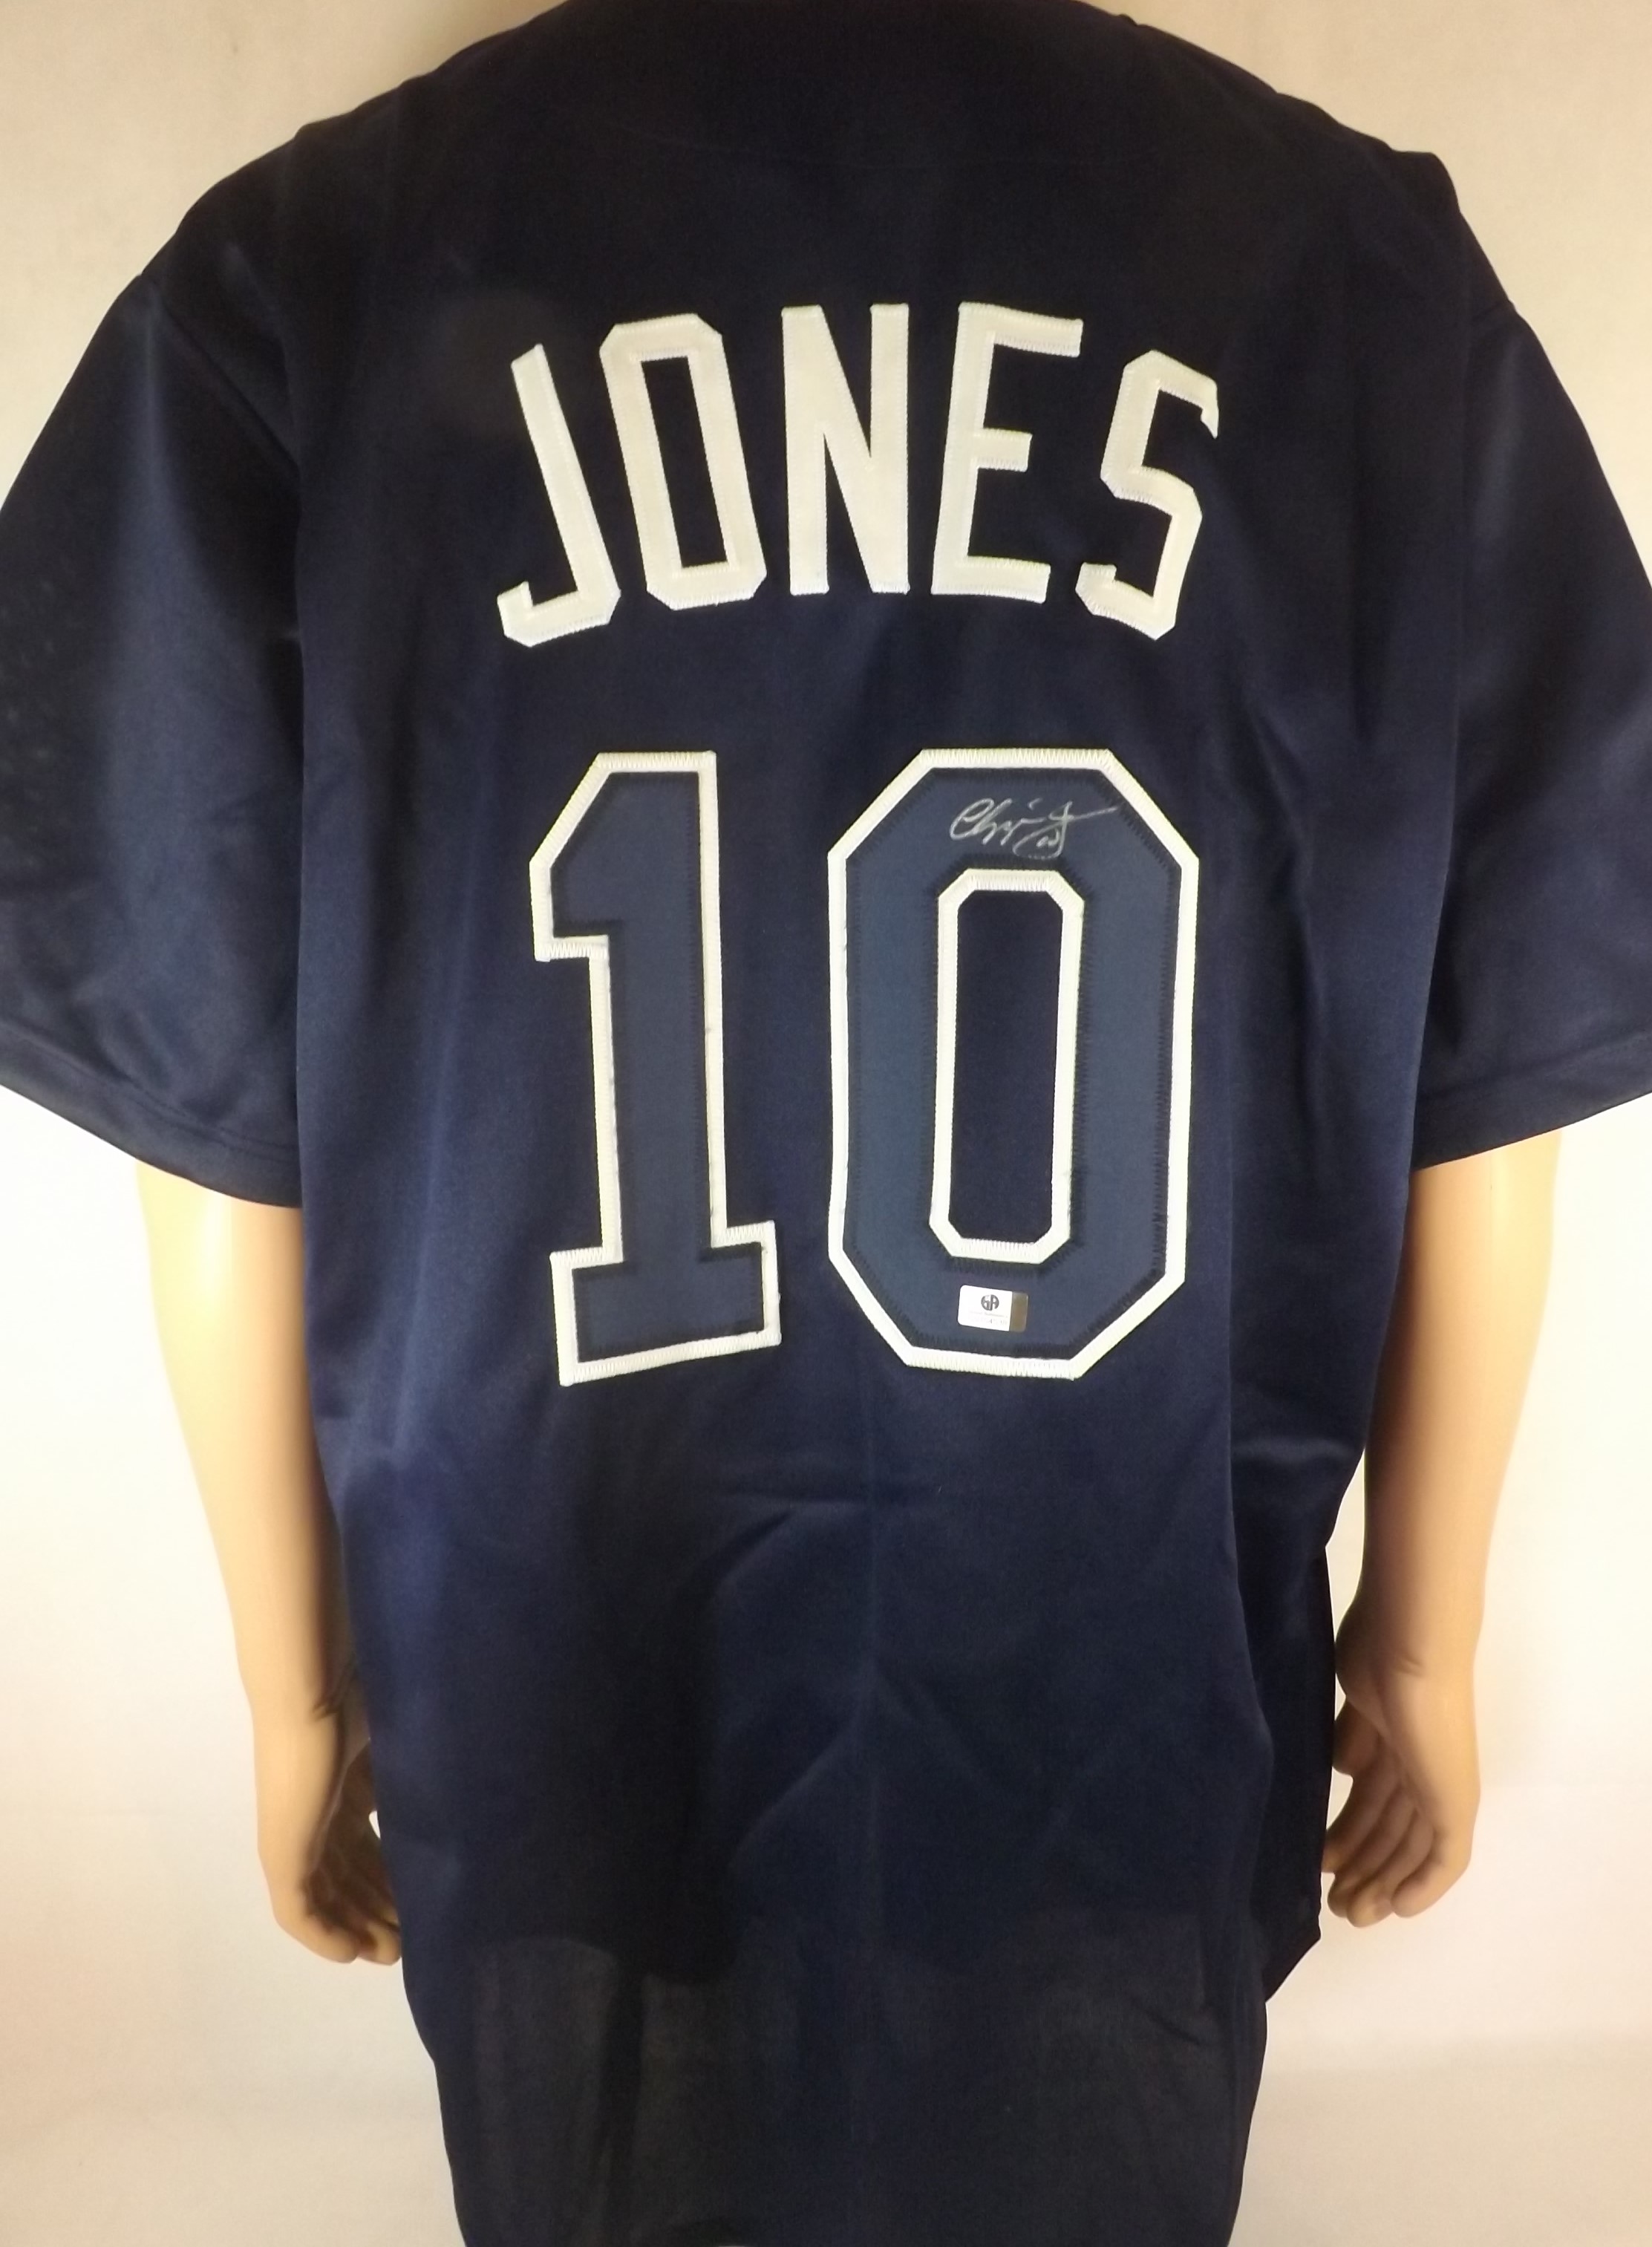 Chipper Jones Autographed Atlanta Braves Custom White Baseball Jersey -  PSA/DNA COA